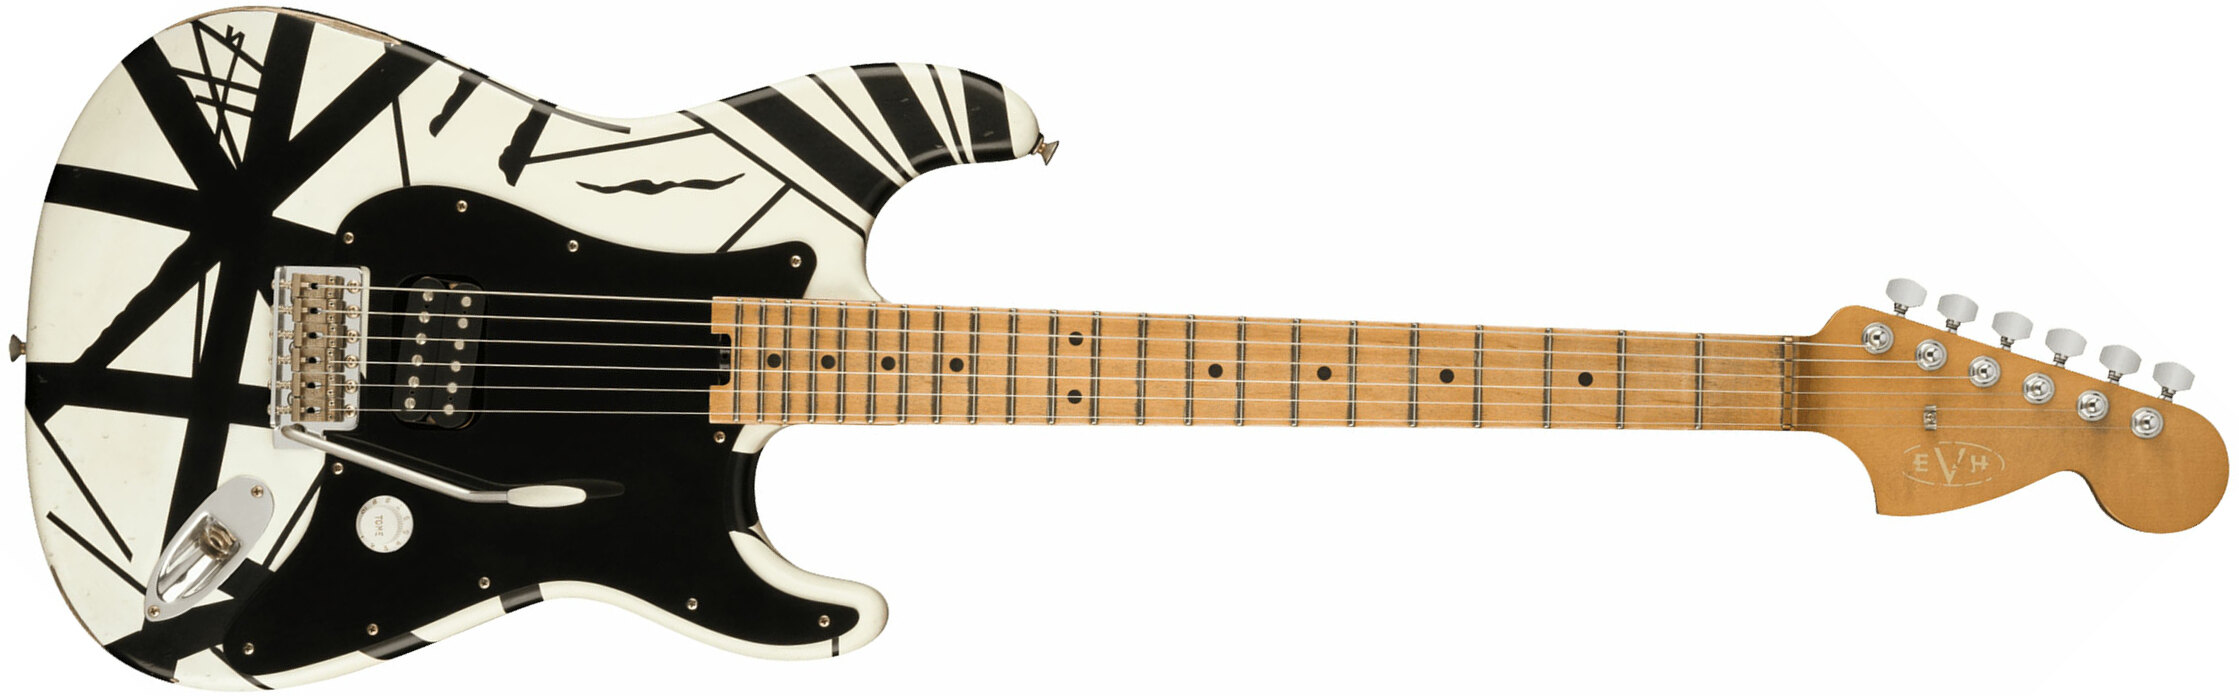 Evh '78 Eruption Striped Series Mex H Trem Mn - White With Black Stripes Relic - Guitarra eléctrica con forma de str. - Main picture